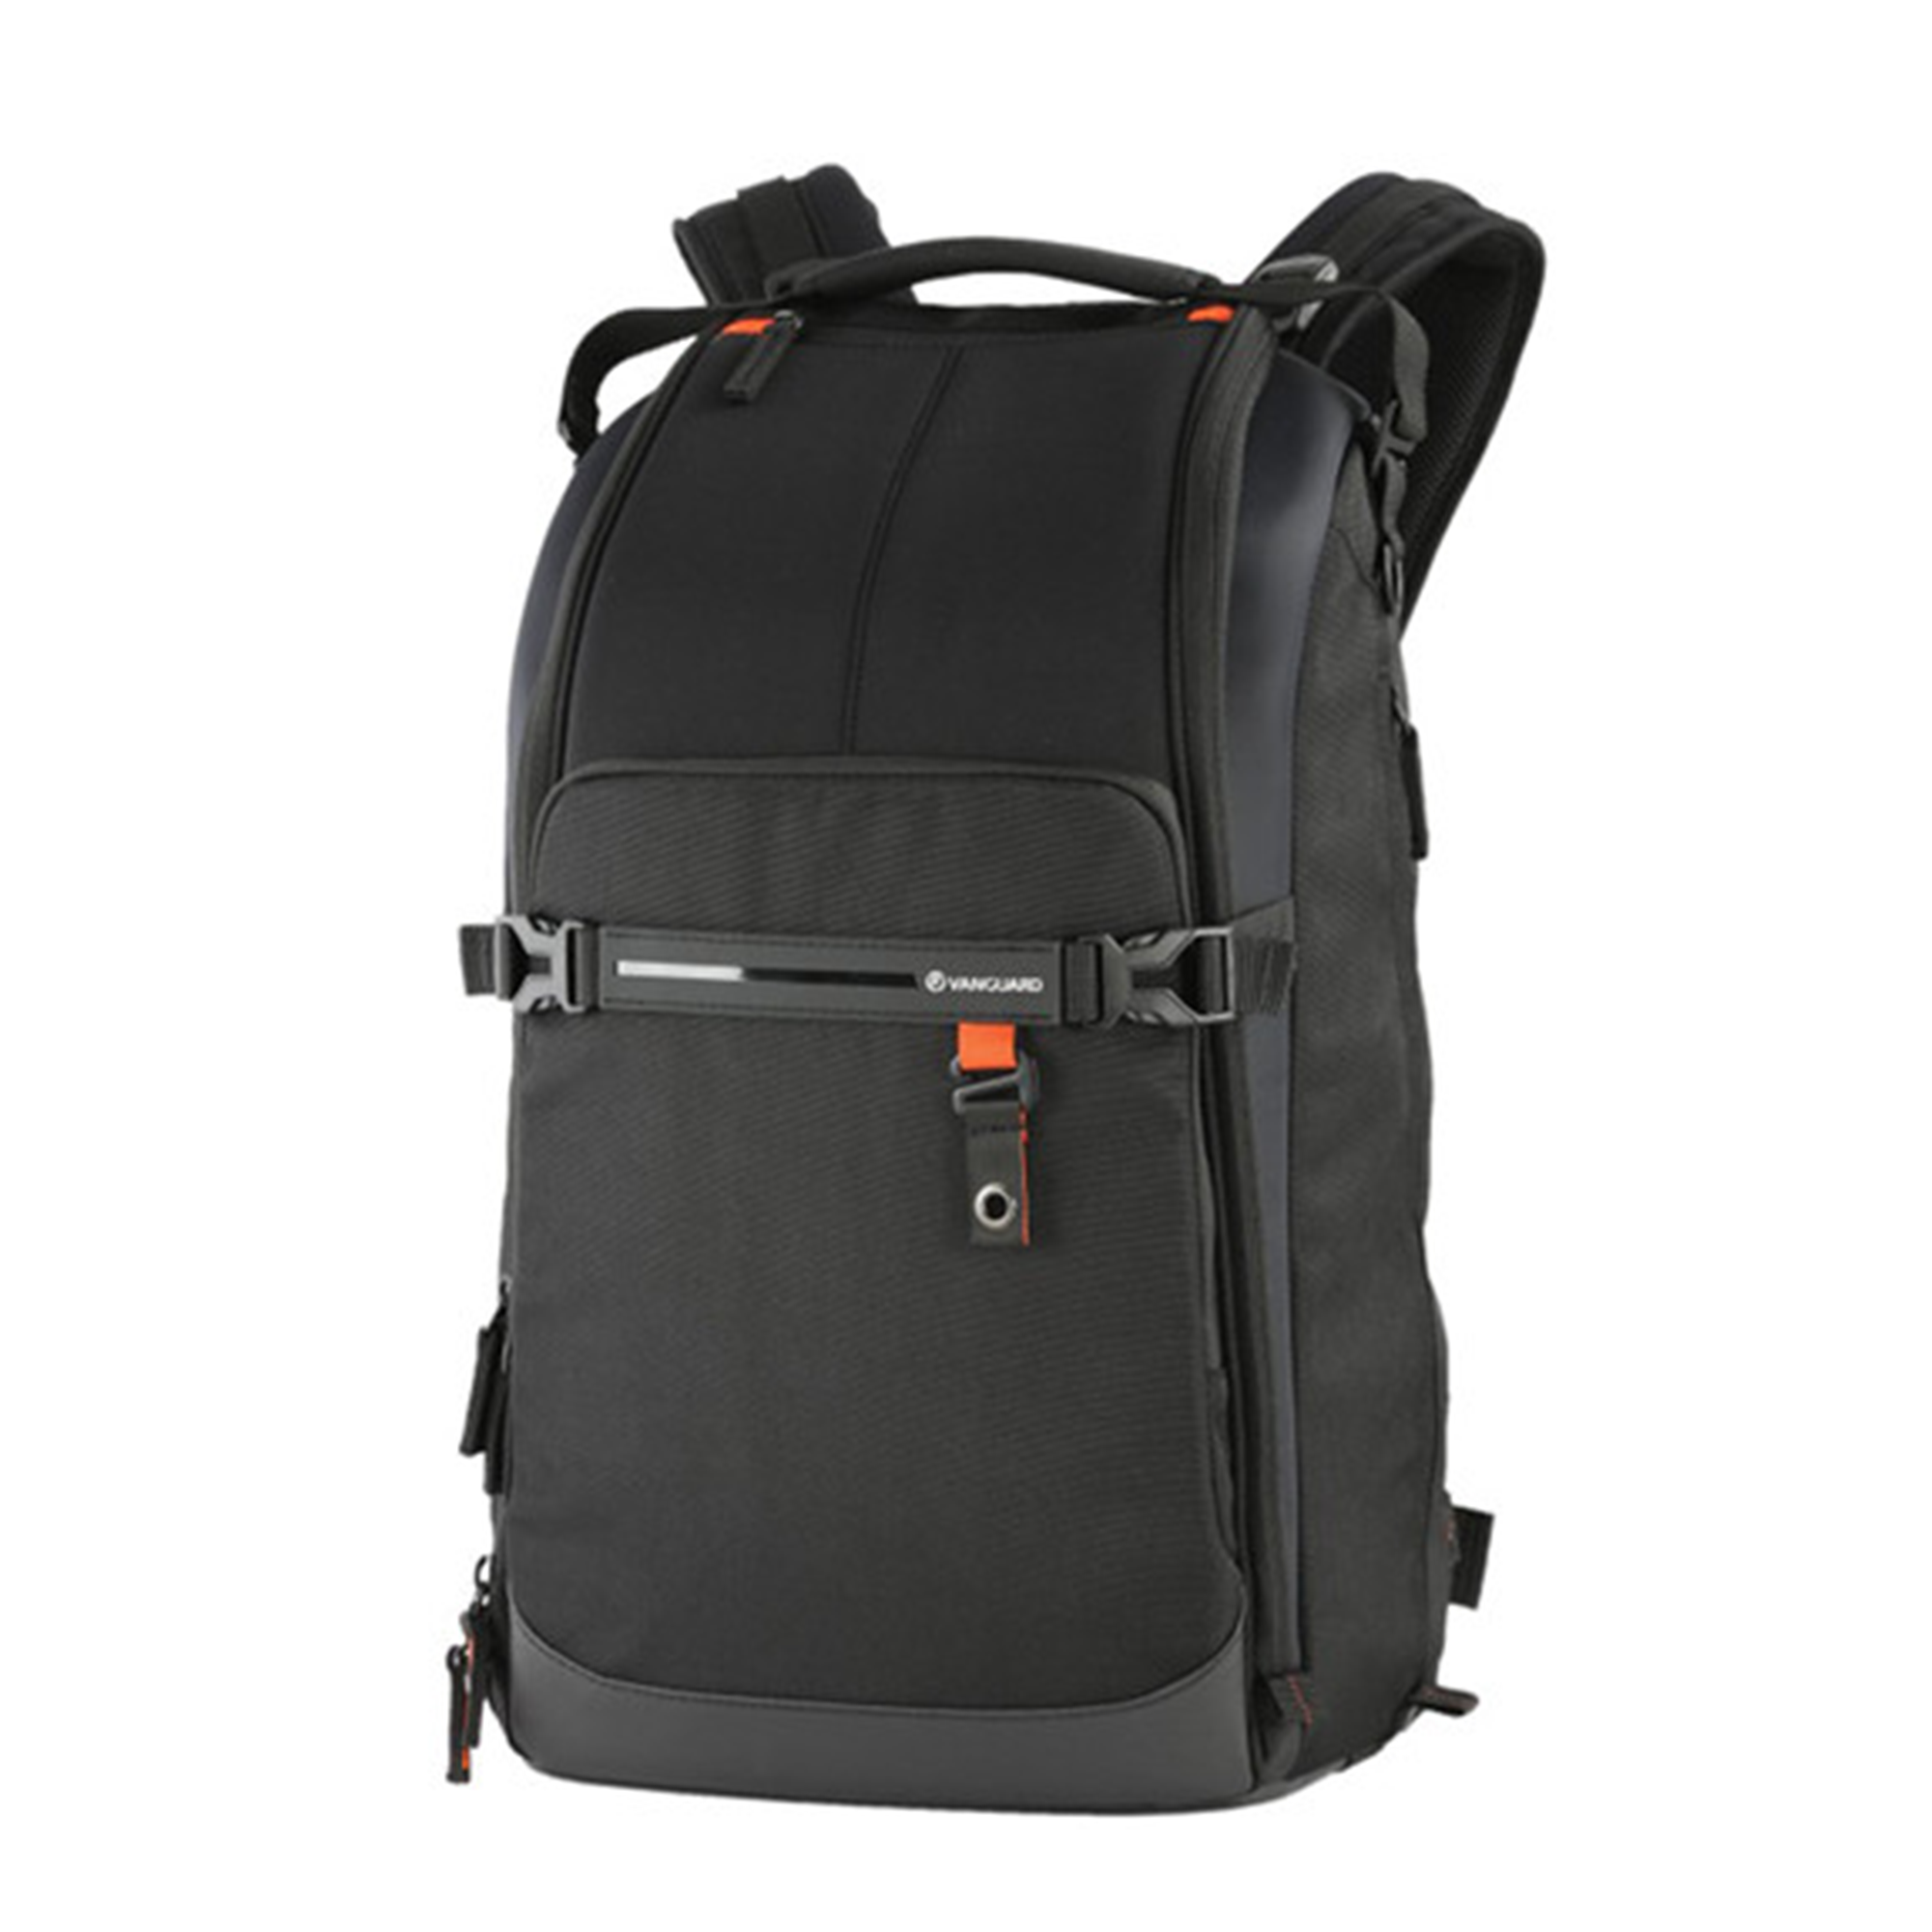 Vanguard Quovio 51 Backpack